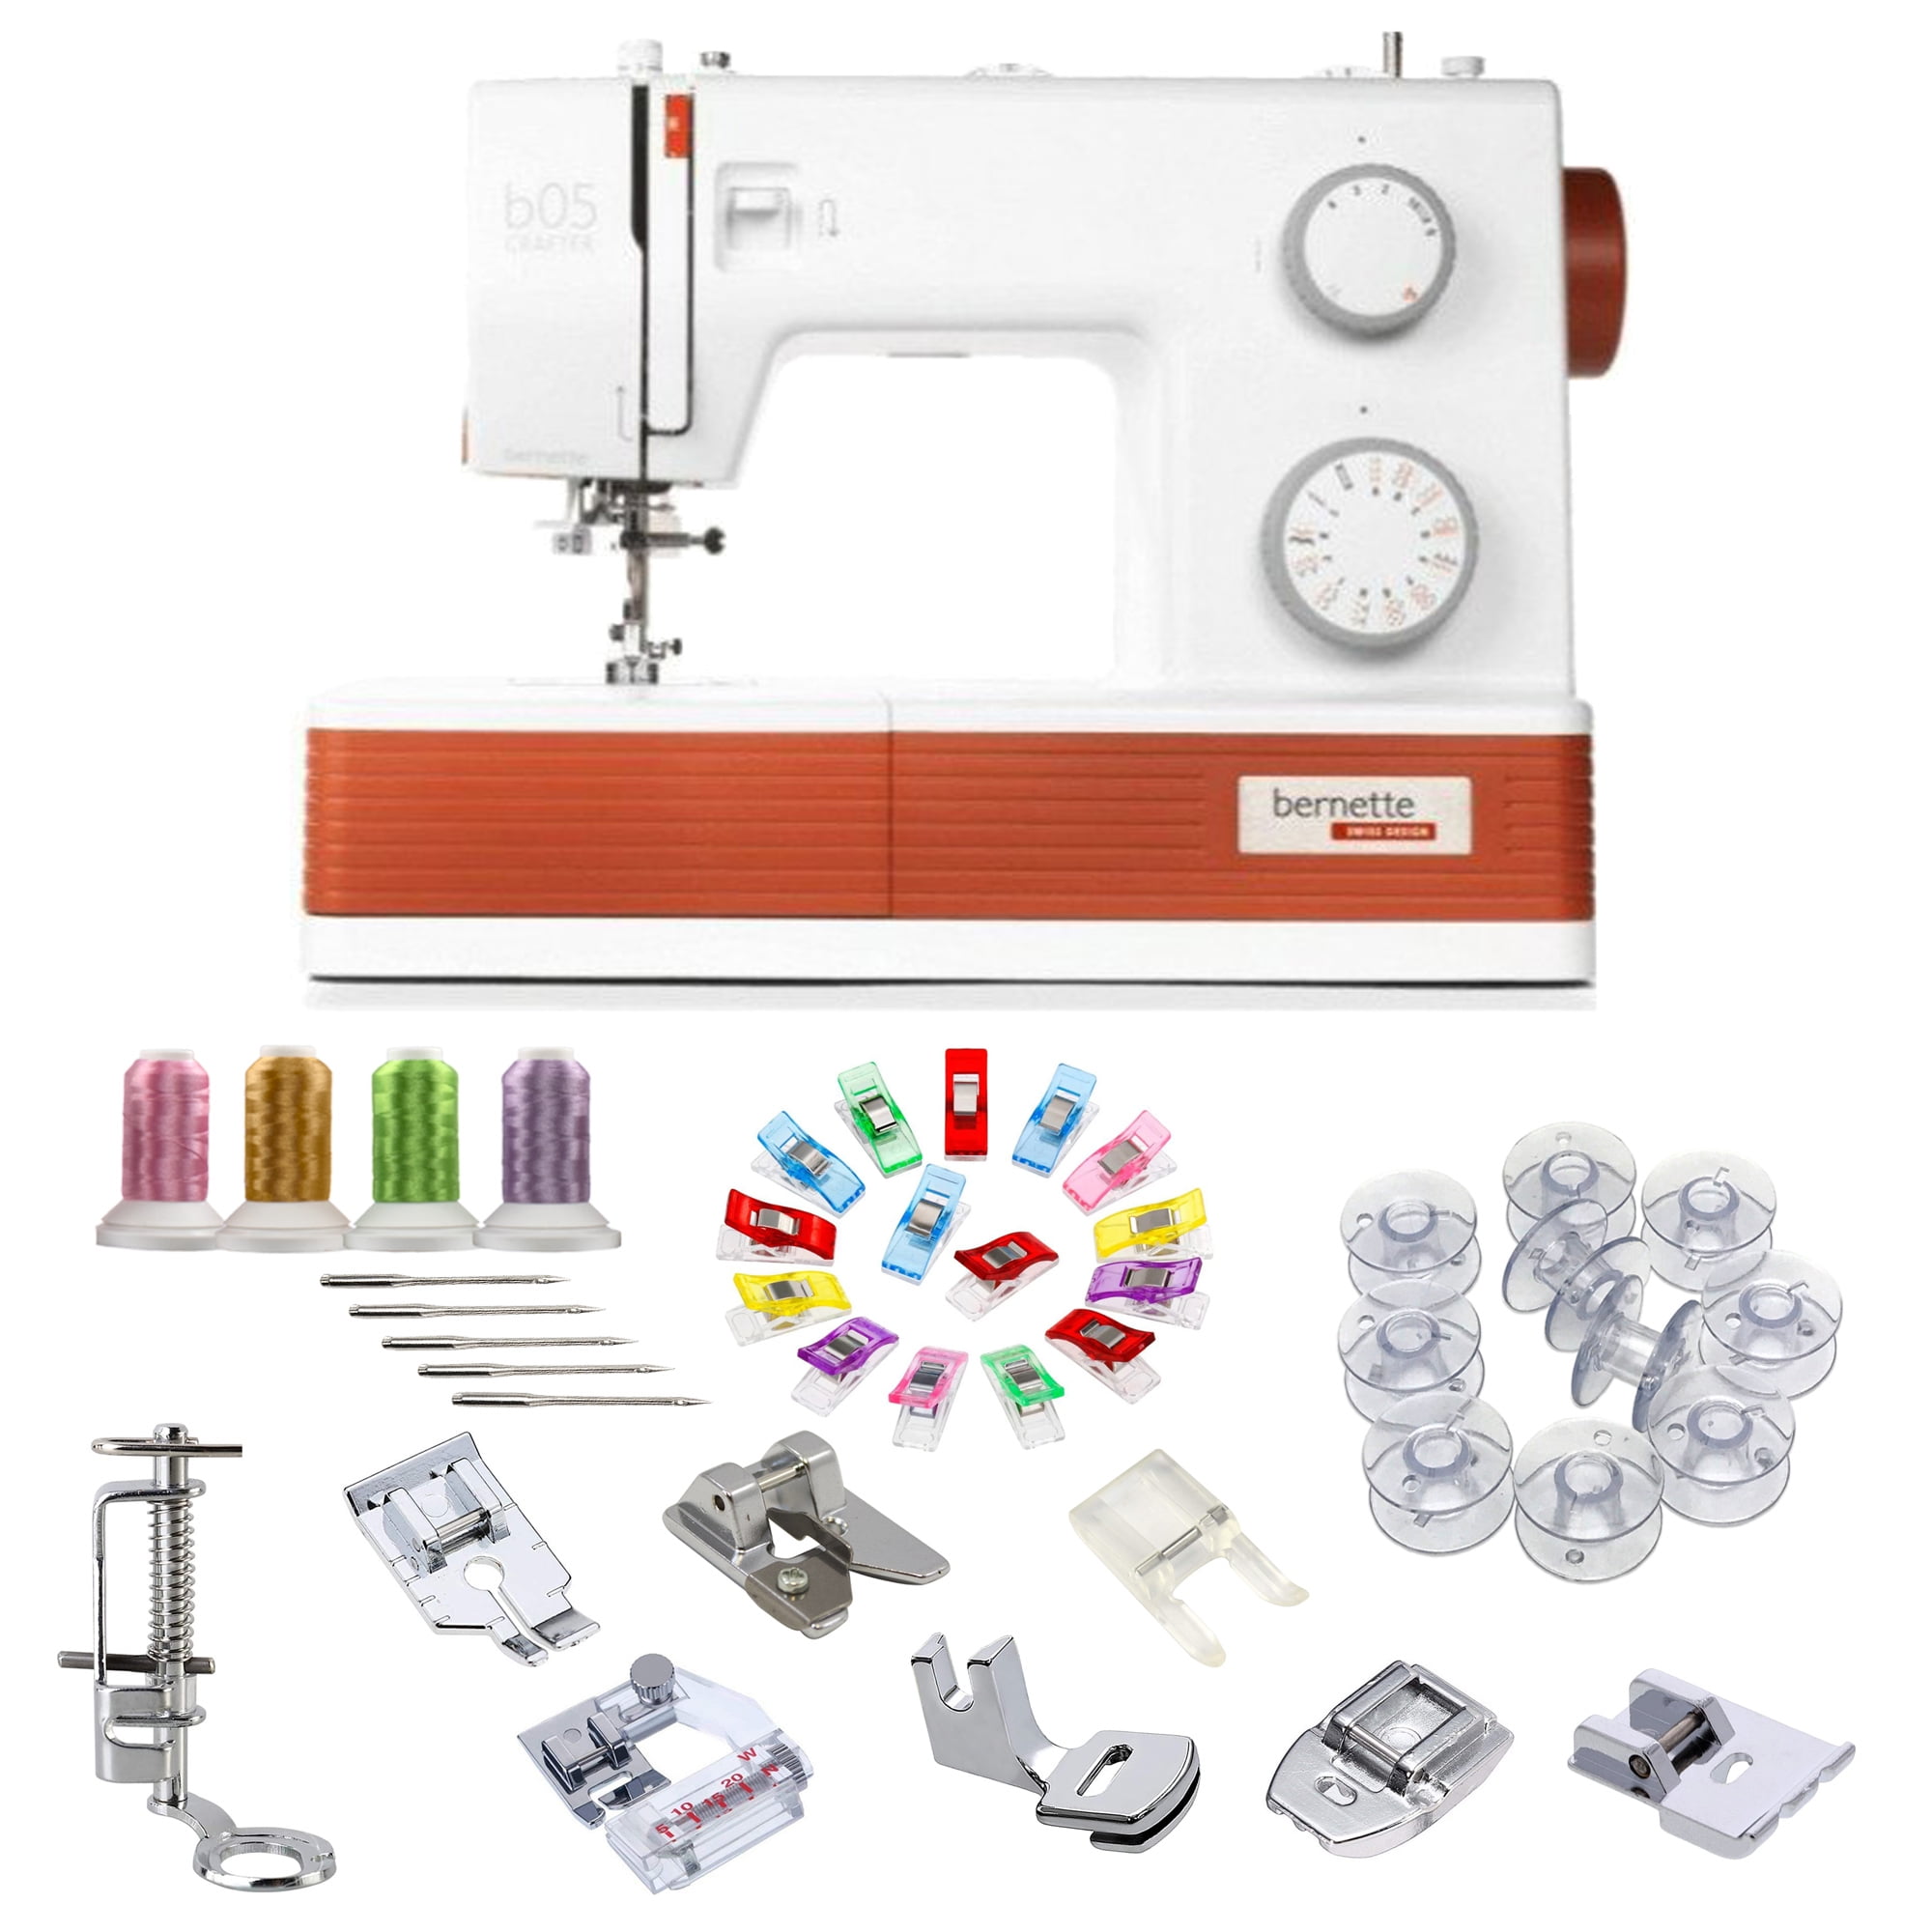 Bernette b05 Crafter Swiss Design Sewing Machine with $249 Bonus Bundle